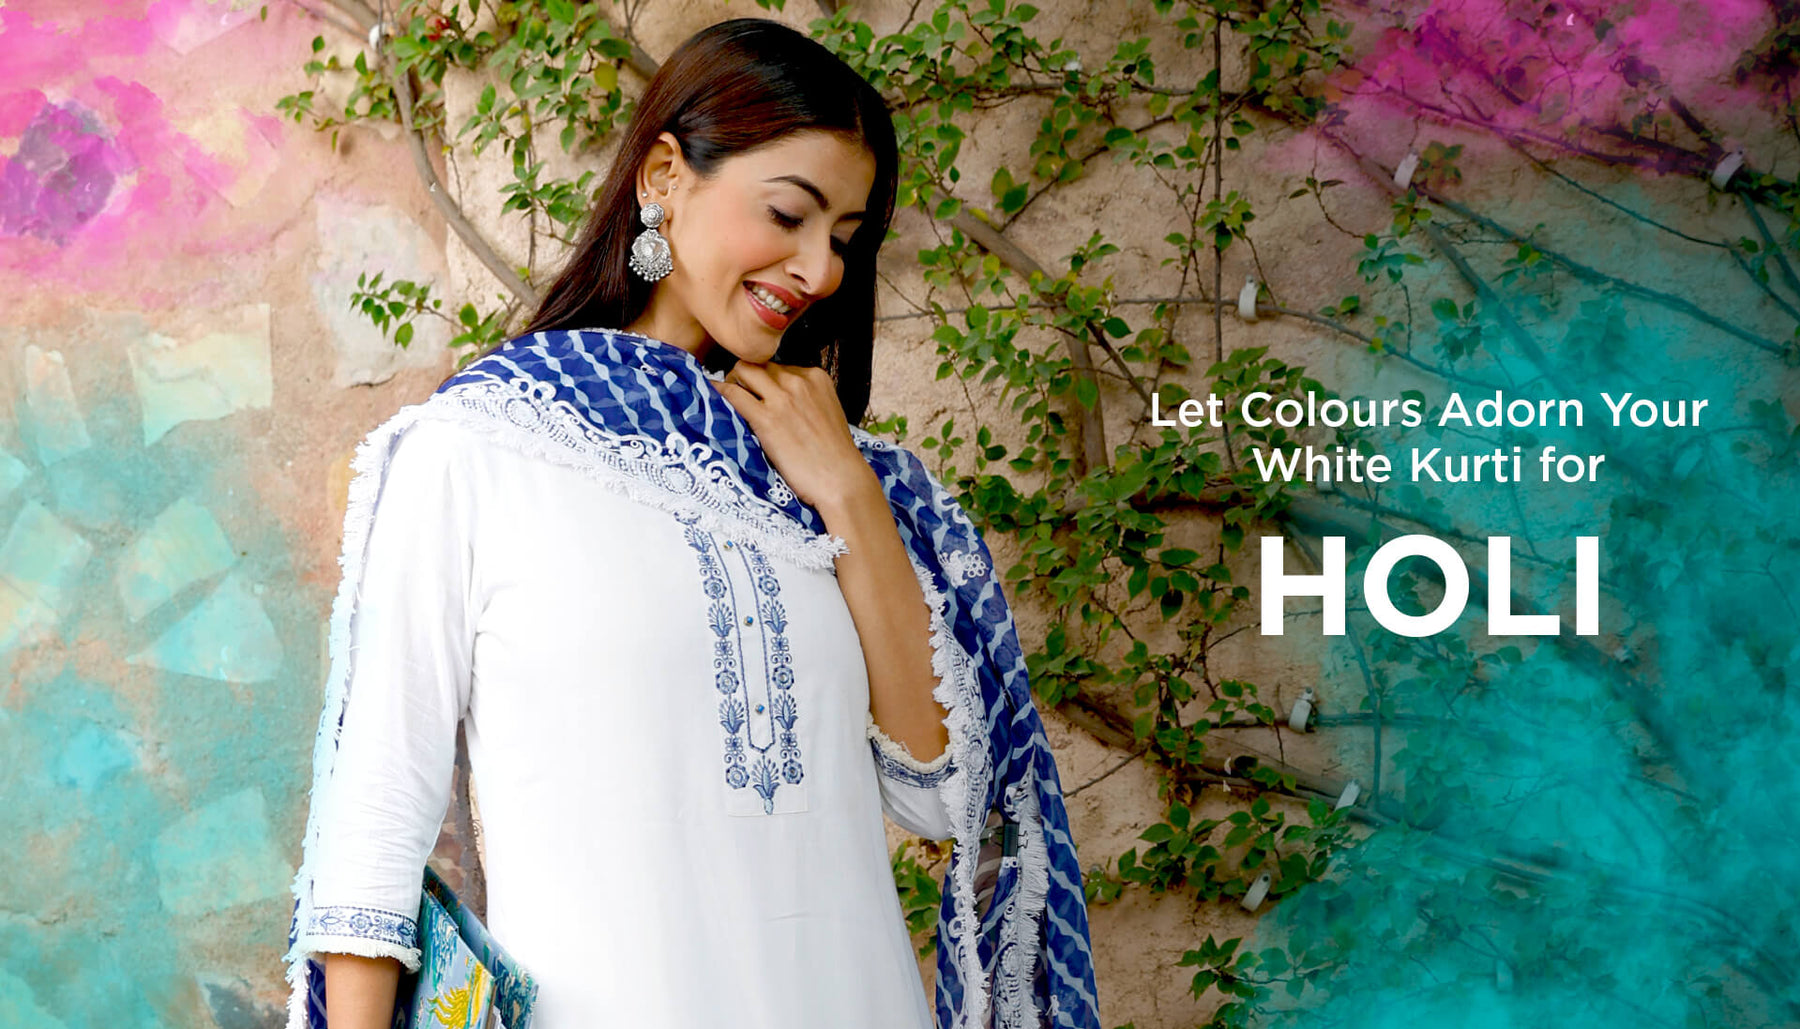 Let Colours Adorn Your White Kurti for Holi